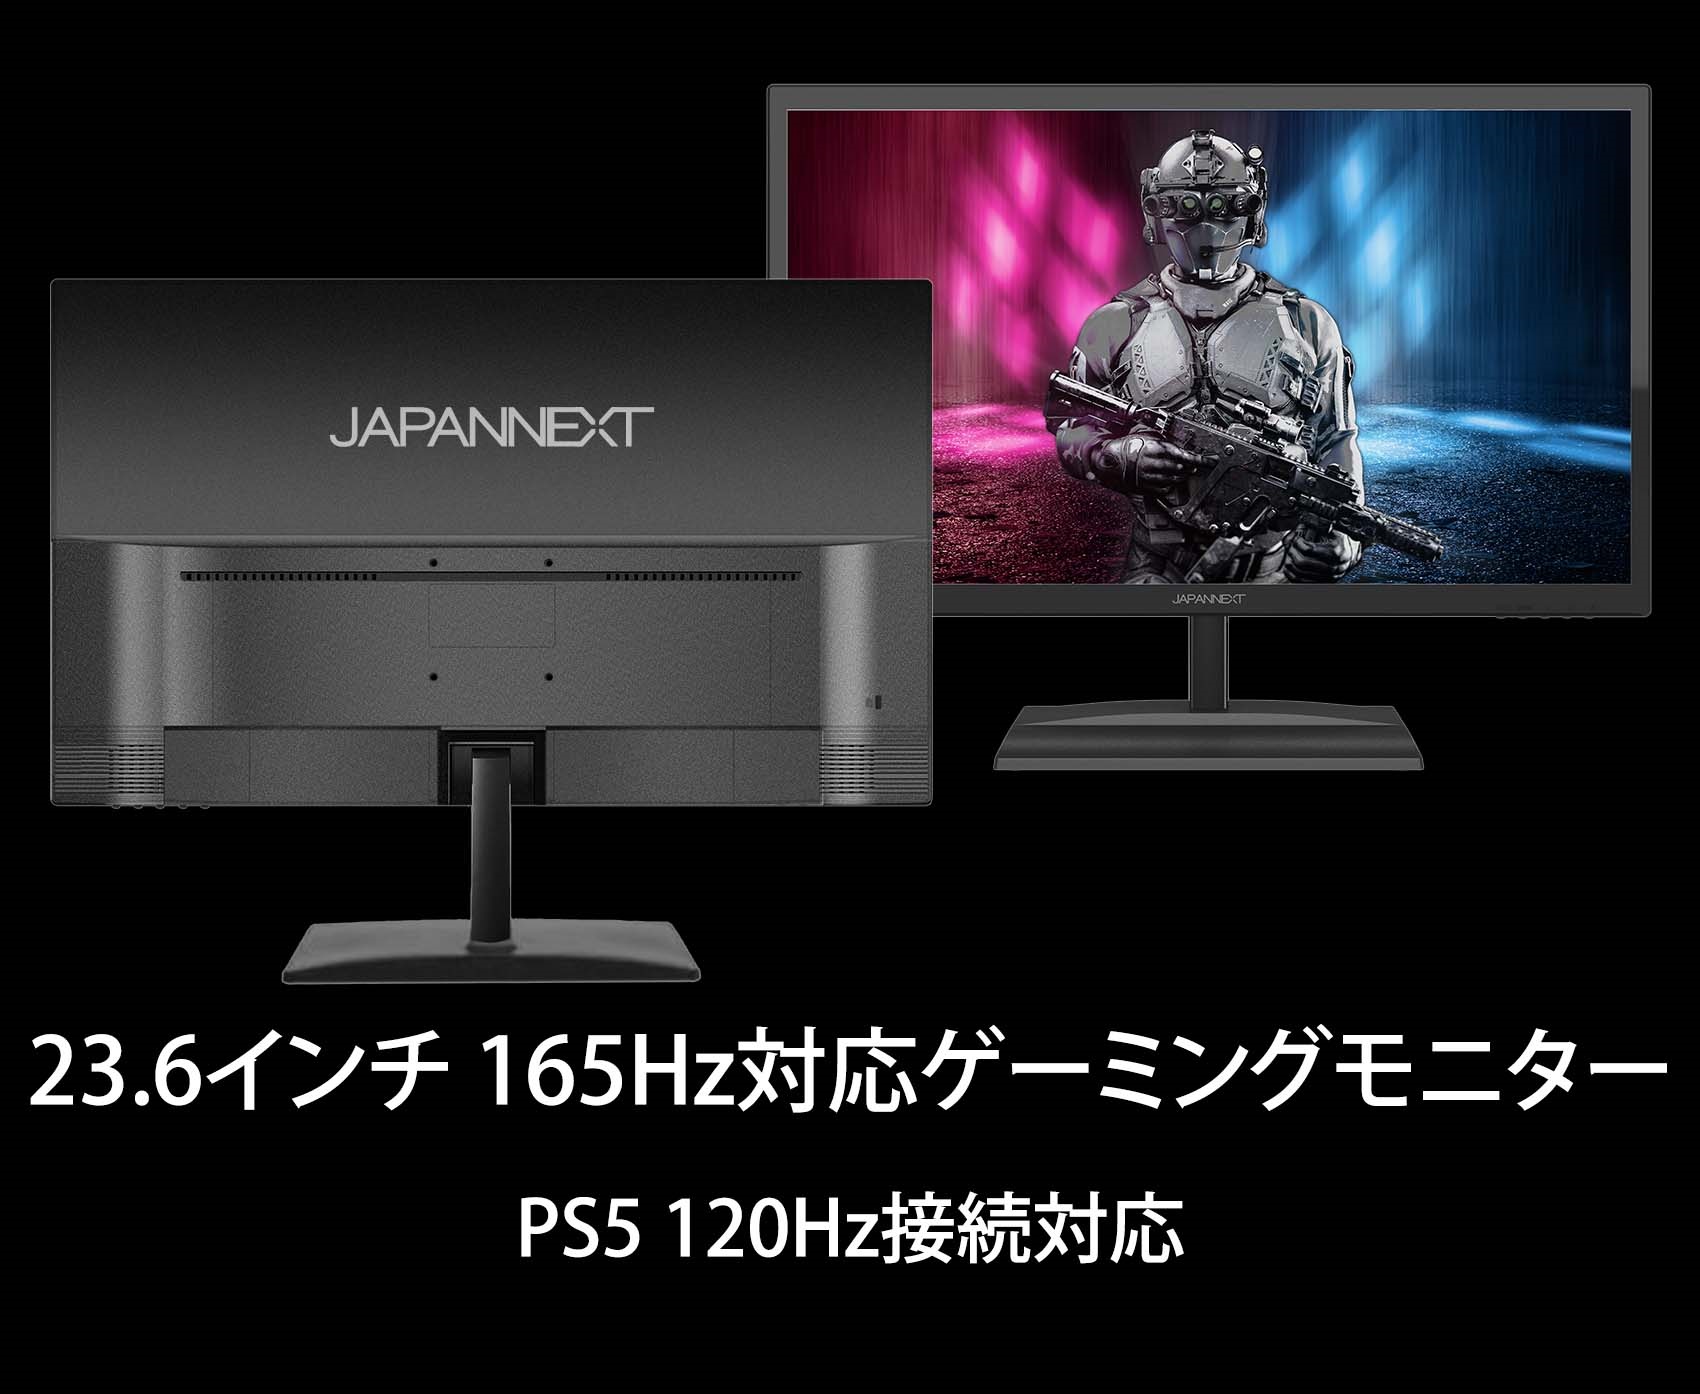 JAPANNEXT JN-GT236FHDR165 23.6型 フルHD(1920×1080) 液晶ゲーミング 